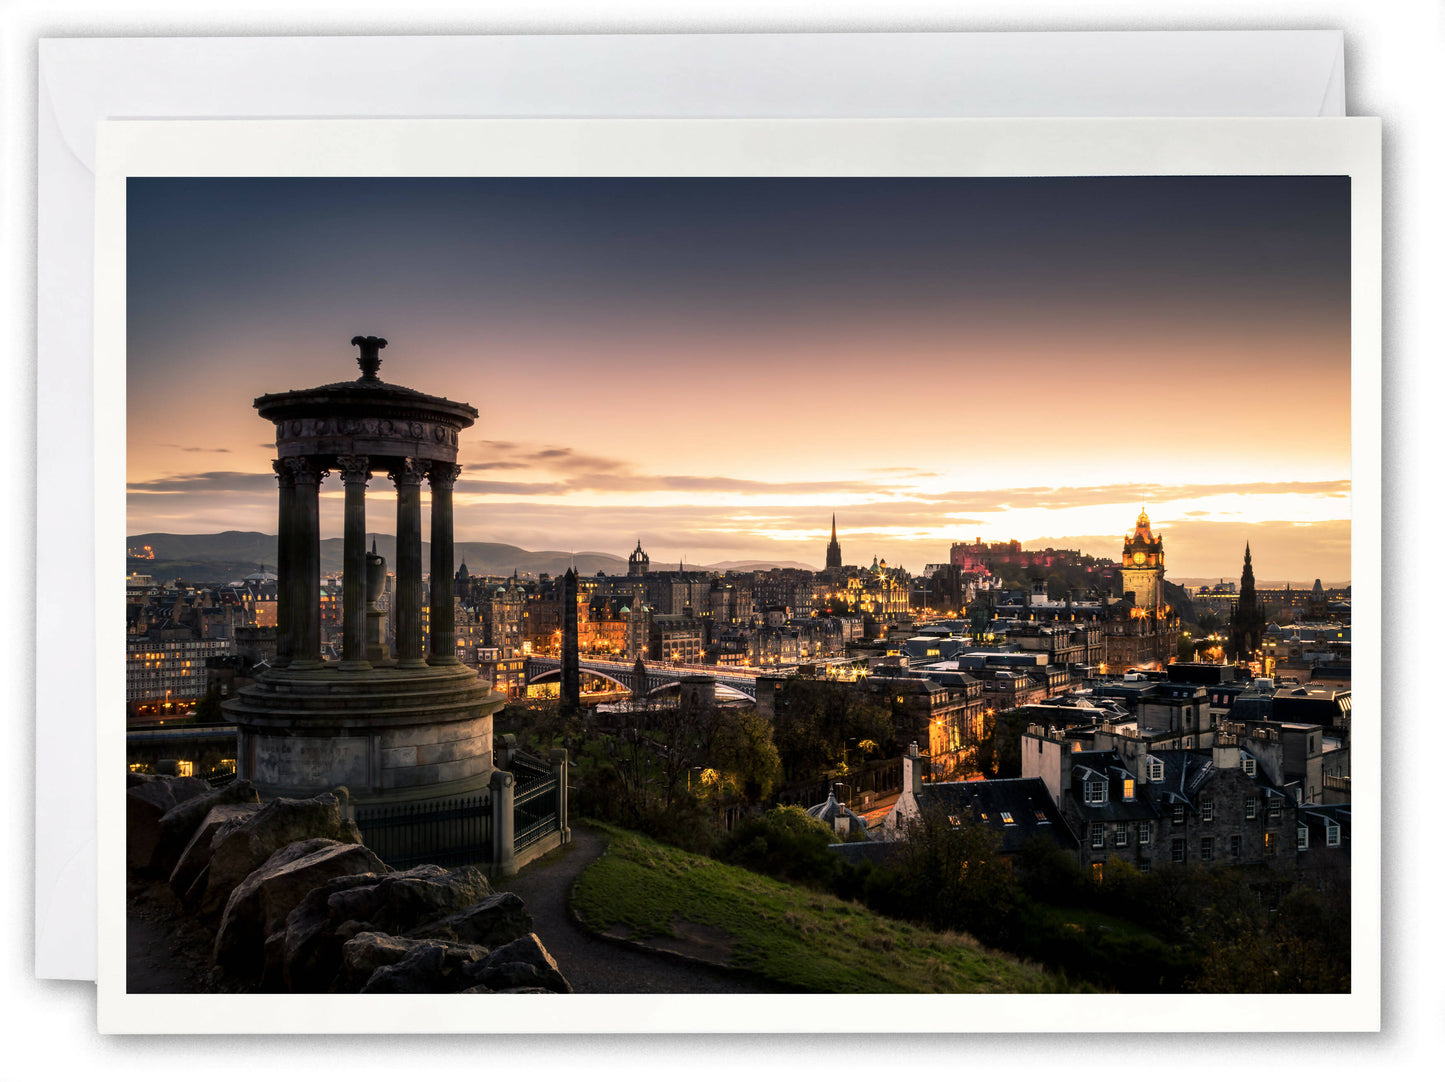 Edinburgh from Calton Hill - Scotland Greeting Card - Blank Inside